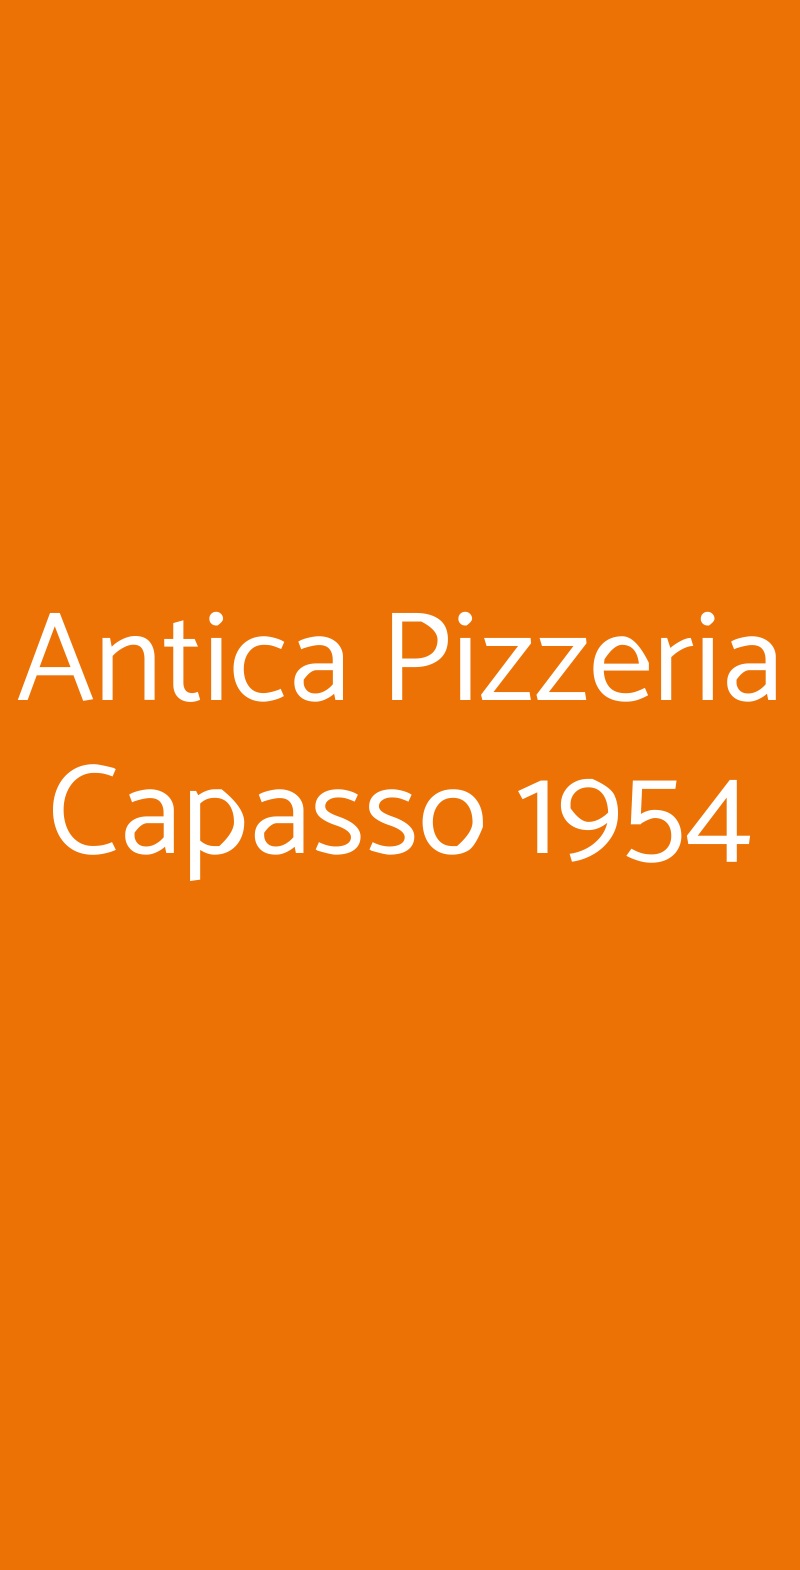 Antica Pizzeria Capasso 1954 Napoli menù 1 pagina